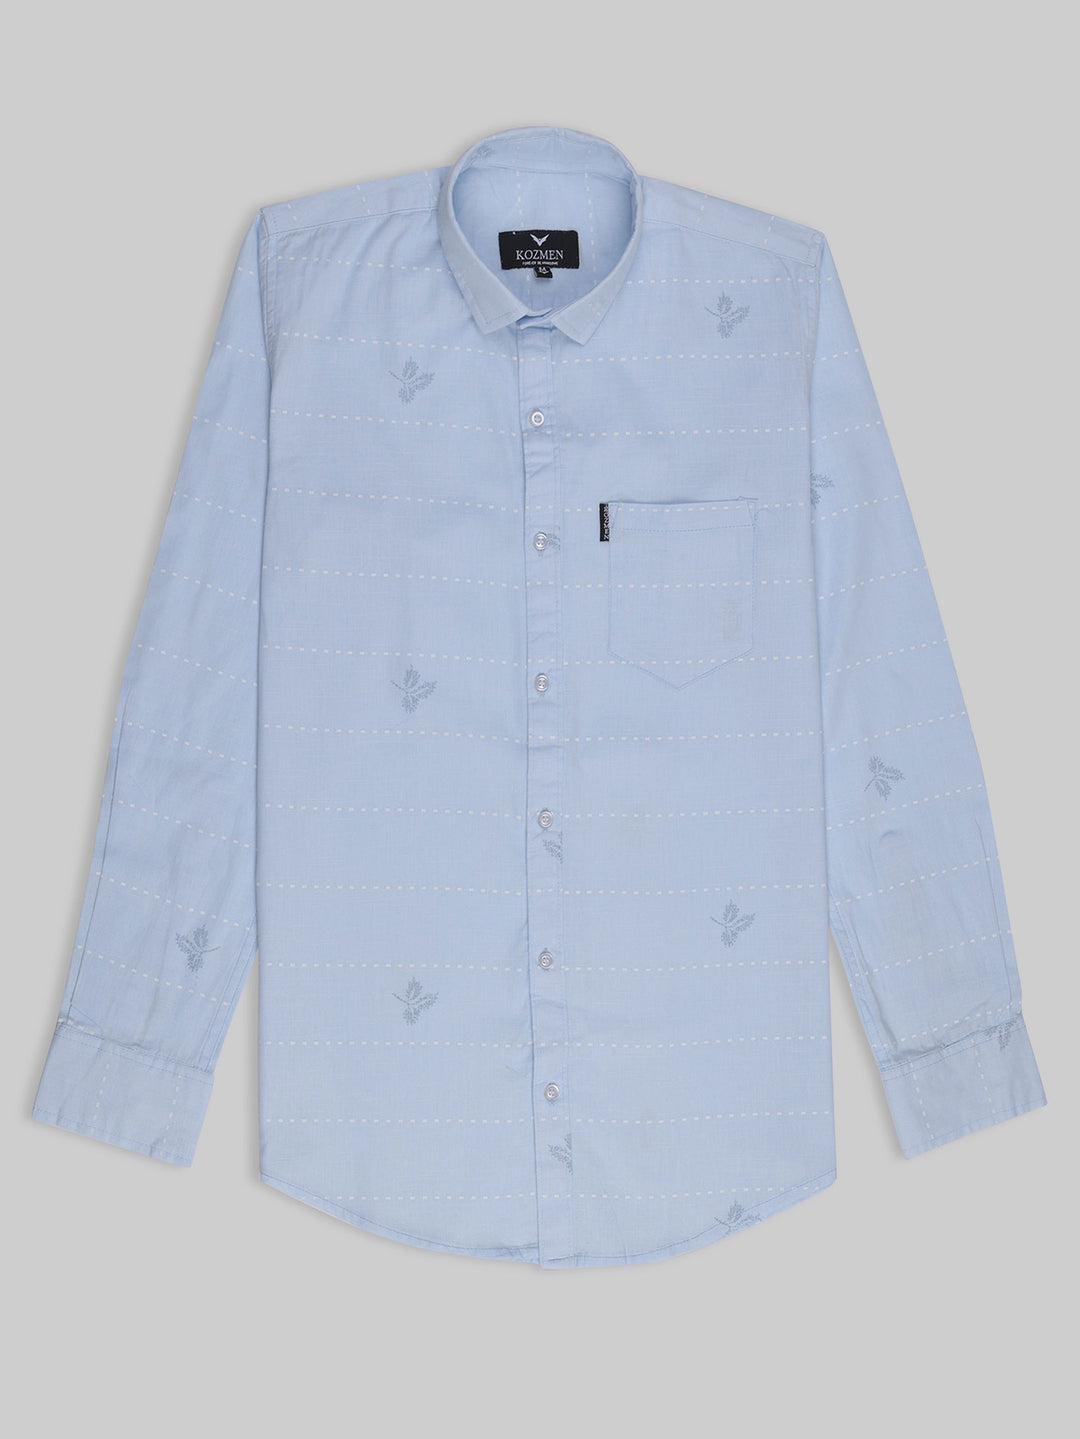 Sky Blue Color Casual Maple Leaf Print Shirt